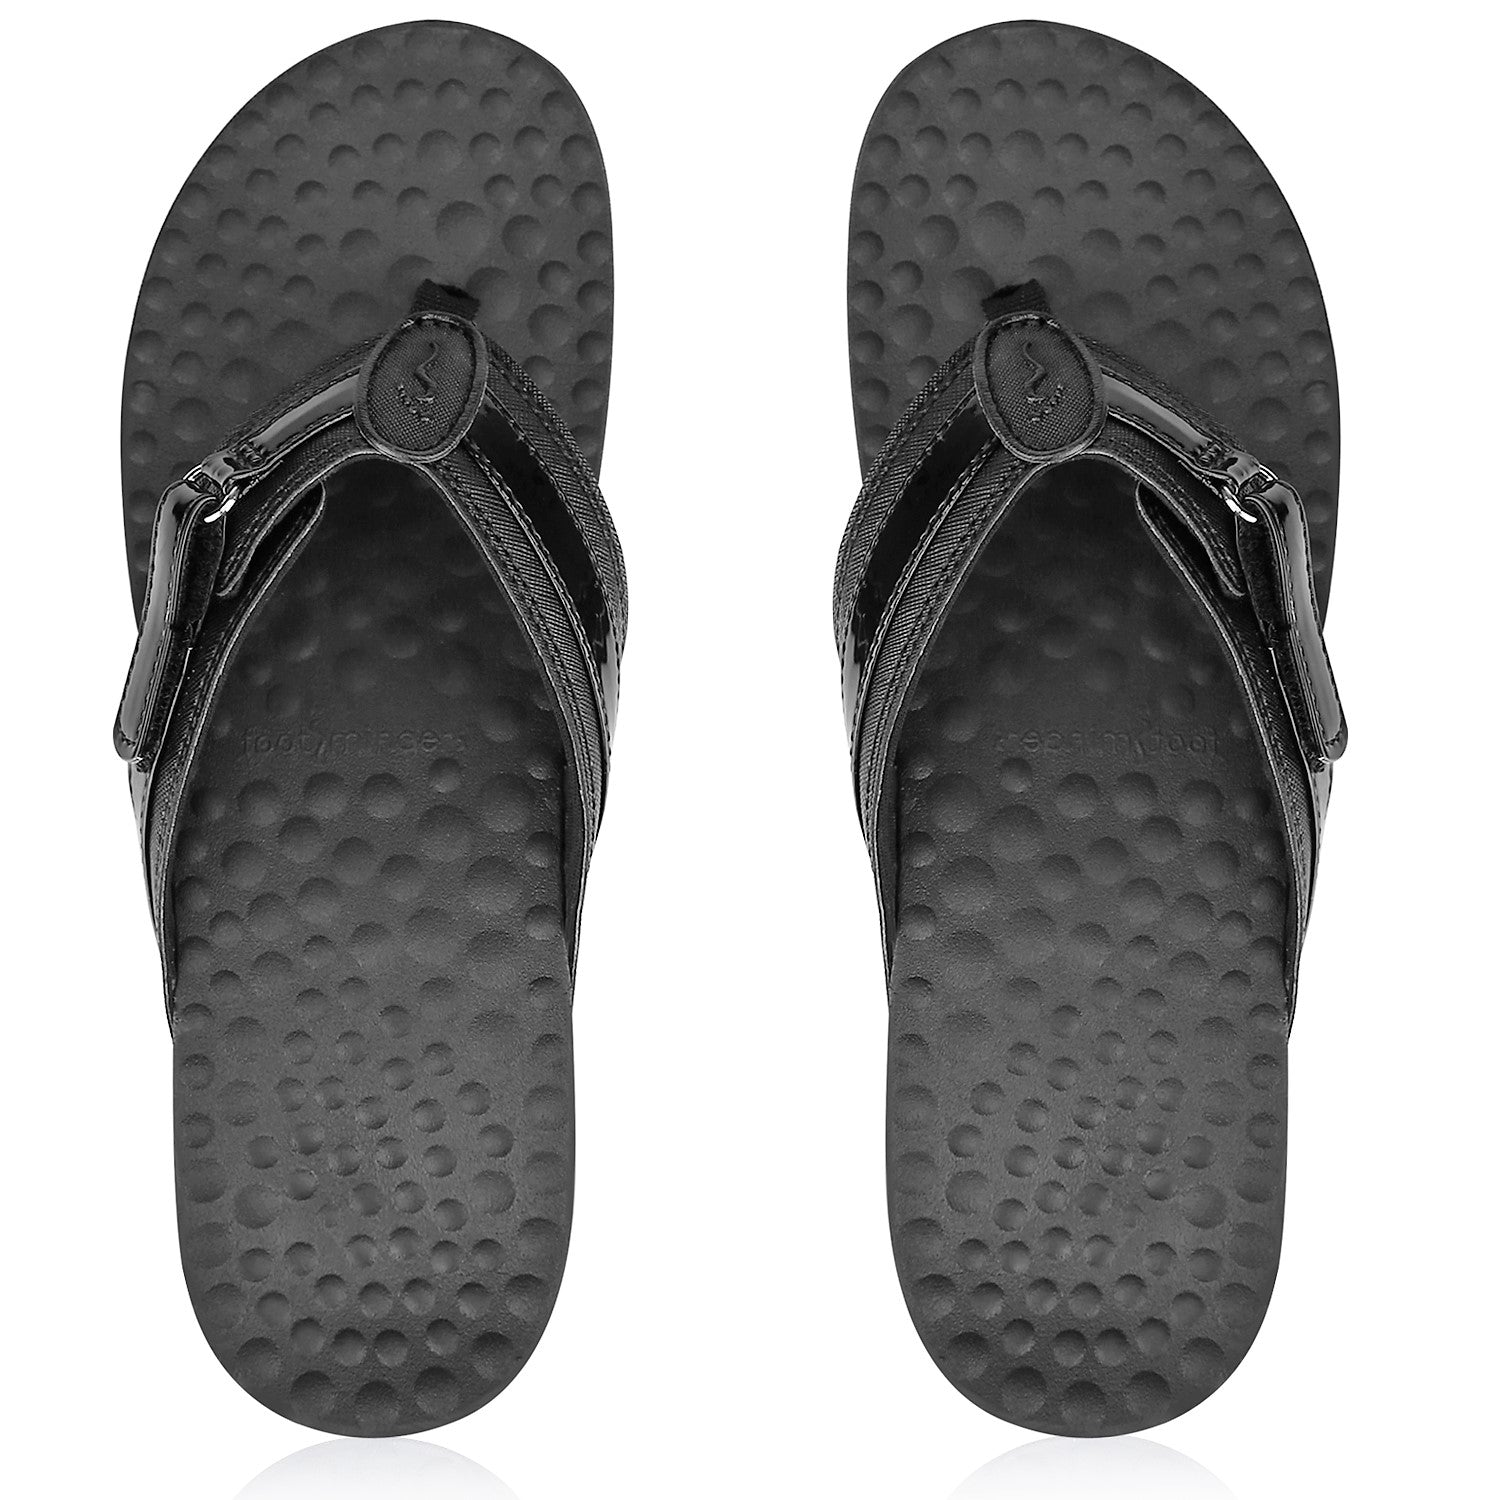 Footminders SEYMOUR Women's Orthotic Sandals Black